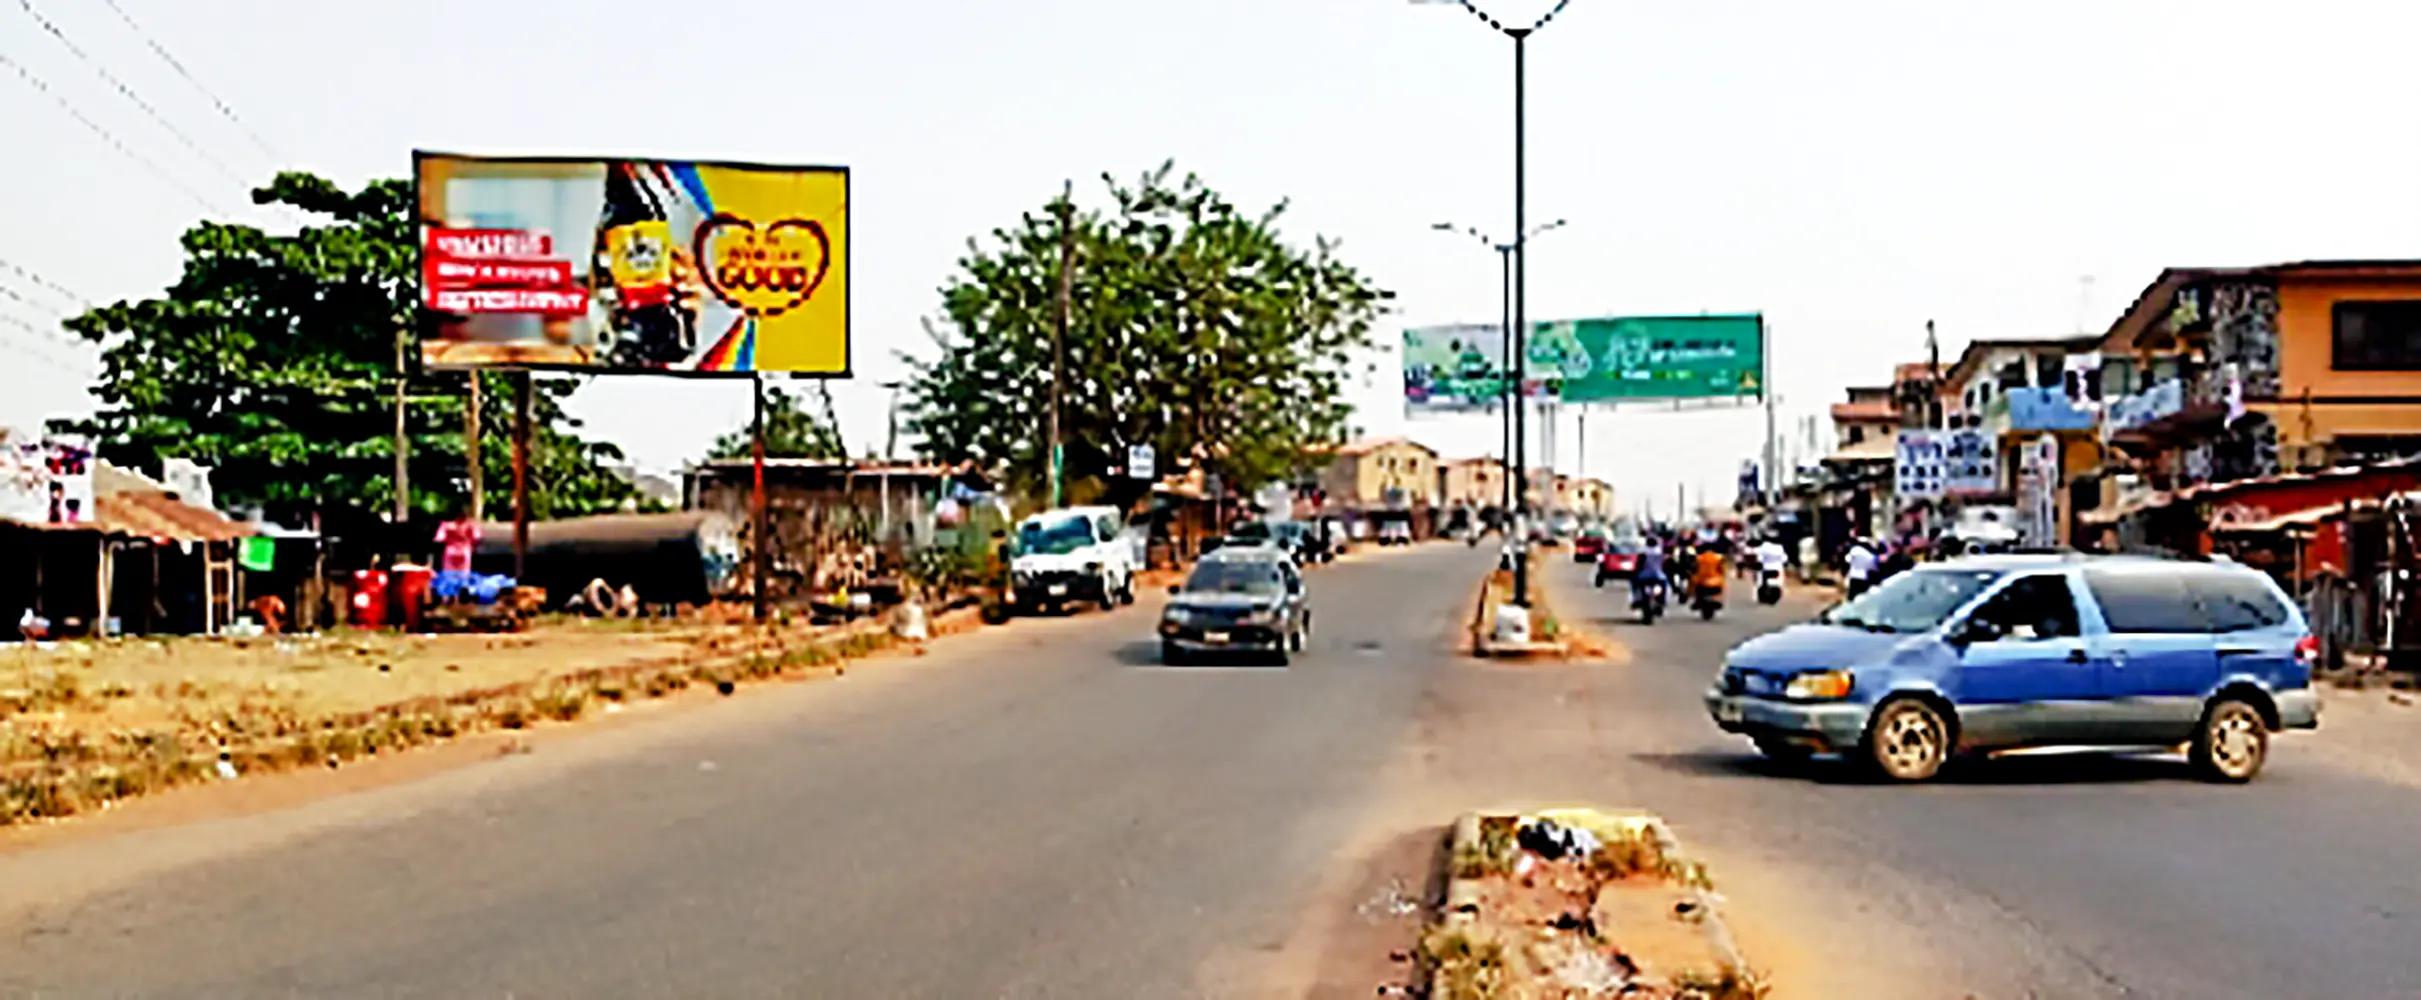 48 Sheet billboard - Sango Poly Road B4 Sango Market, Lfacing